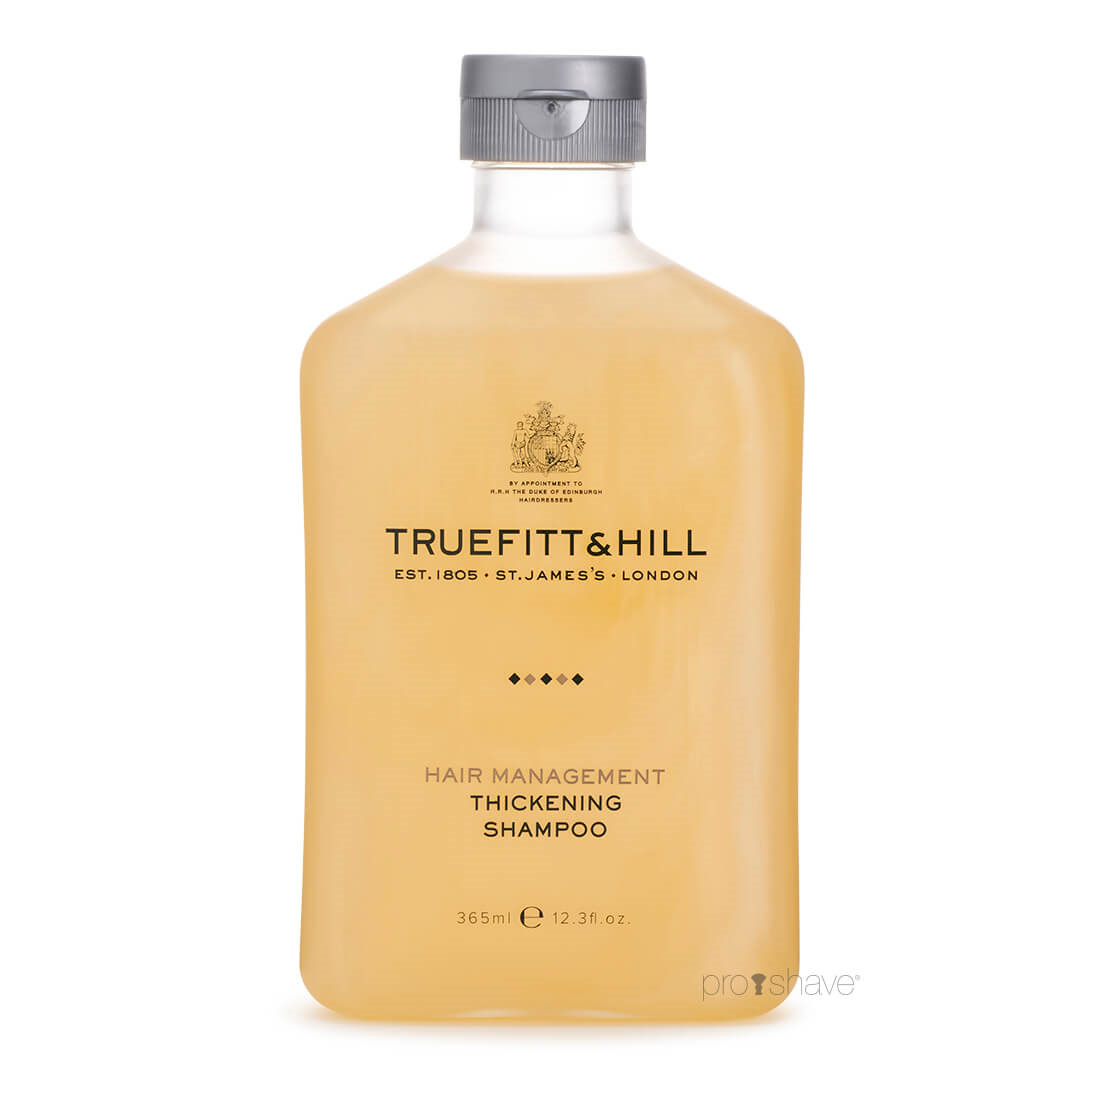 Billede af Truefitt & Hill Thickening Shampoo, 365 ml.